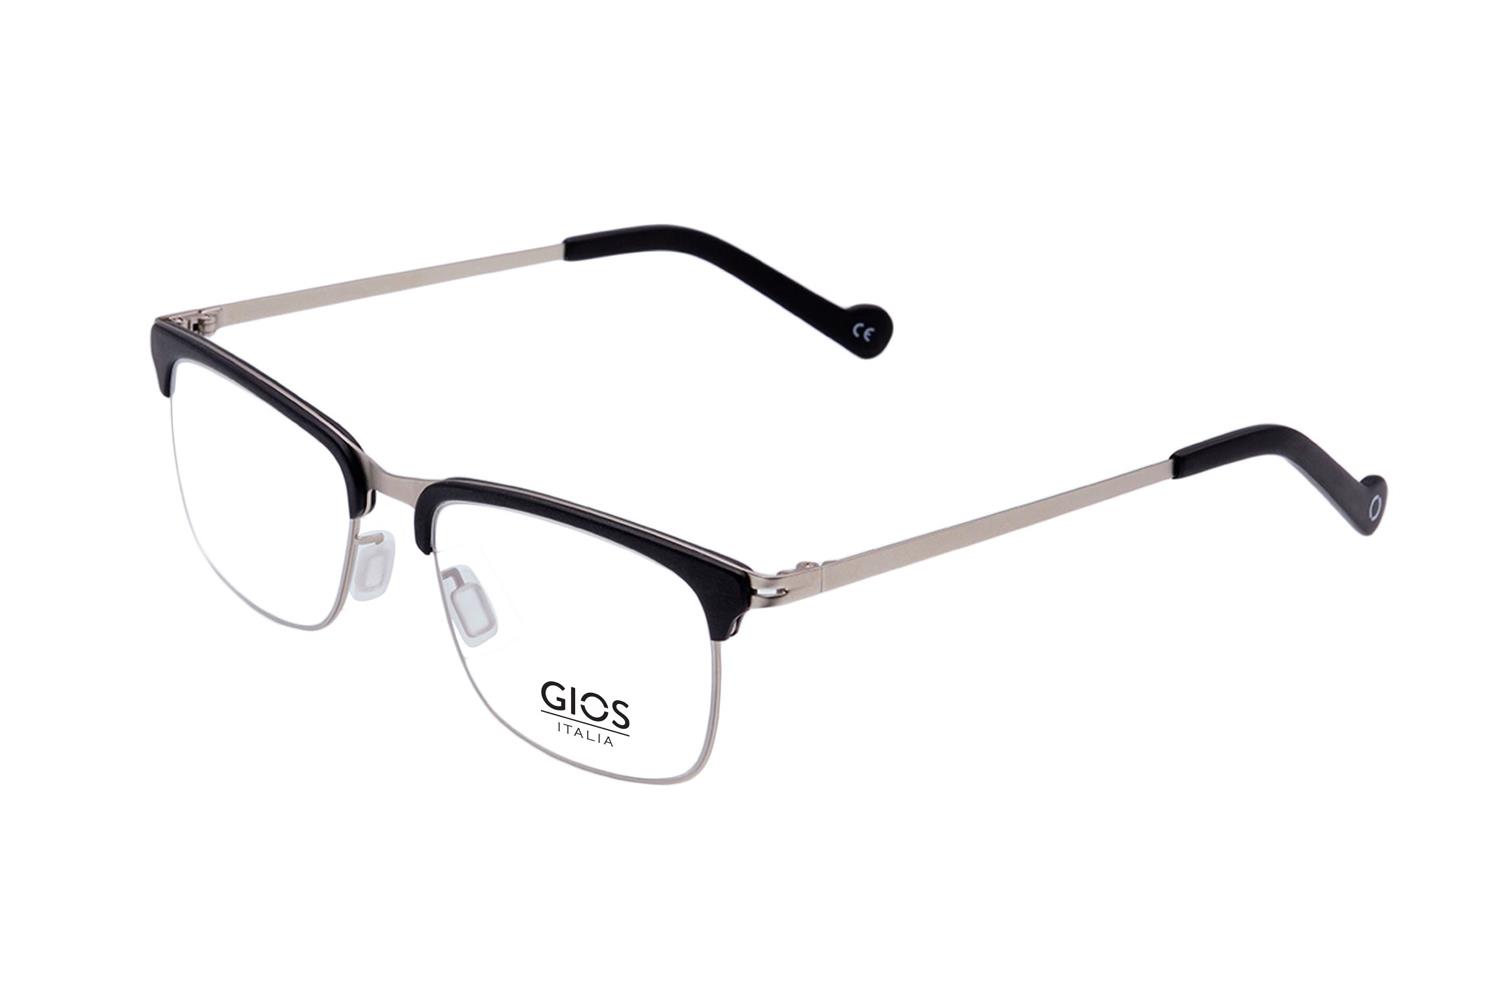 Picture of Gios Italia Eyeglasses SN200020